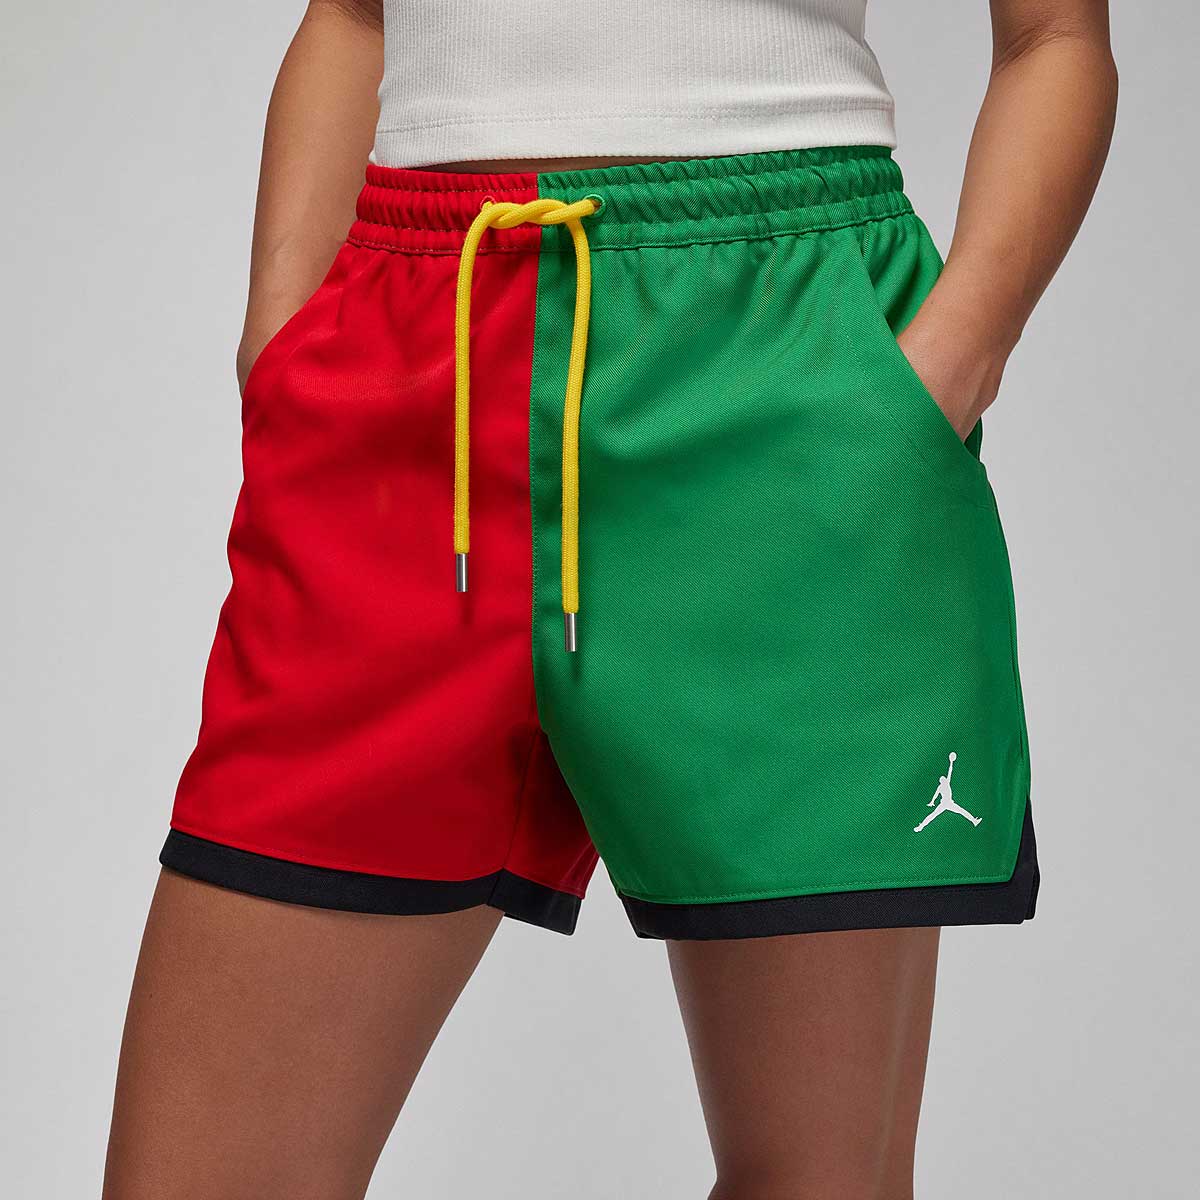 Image of Jordan W J Quai54 Woven Shorts, Black/red/green